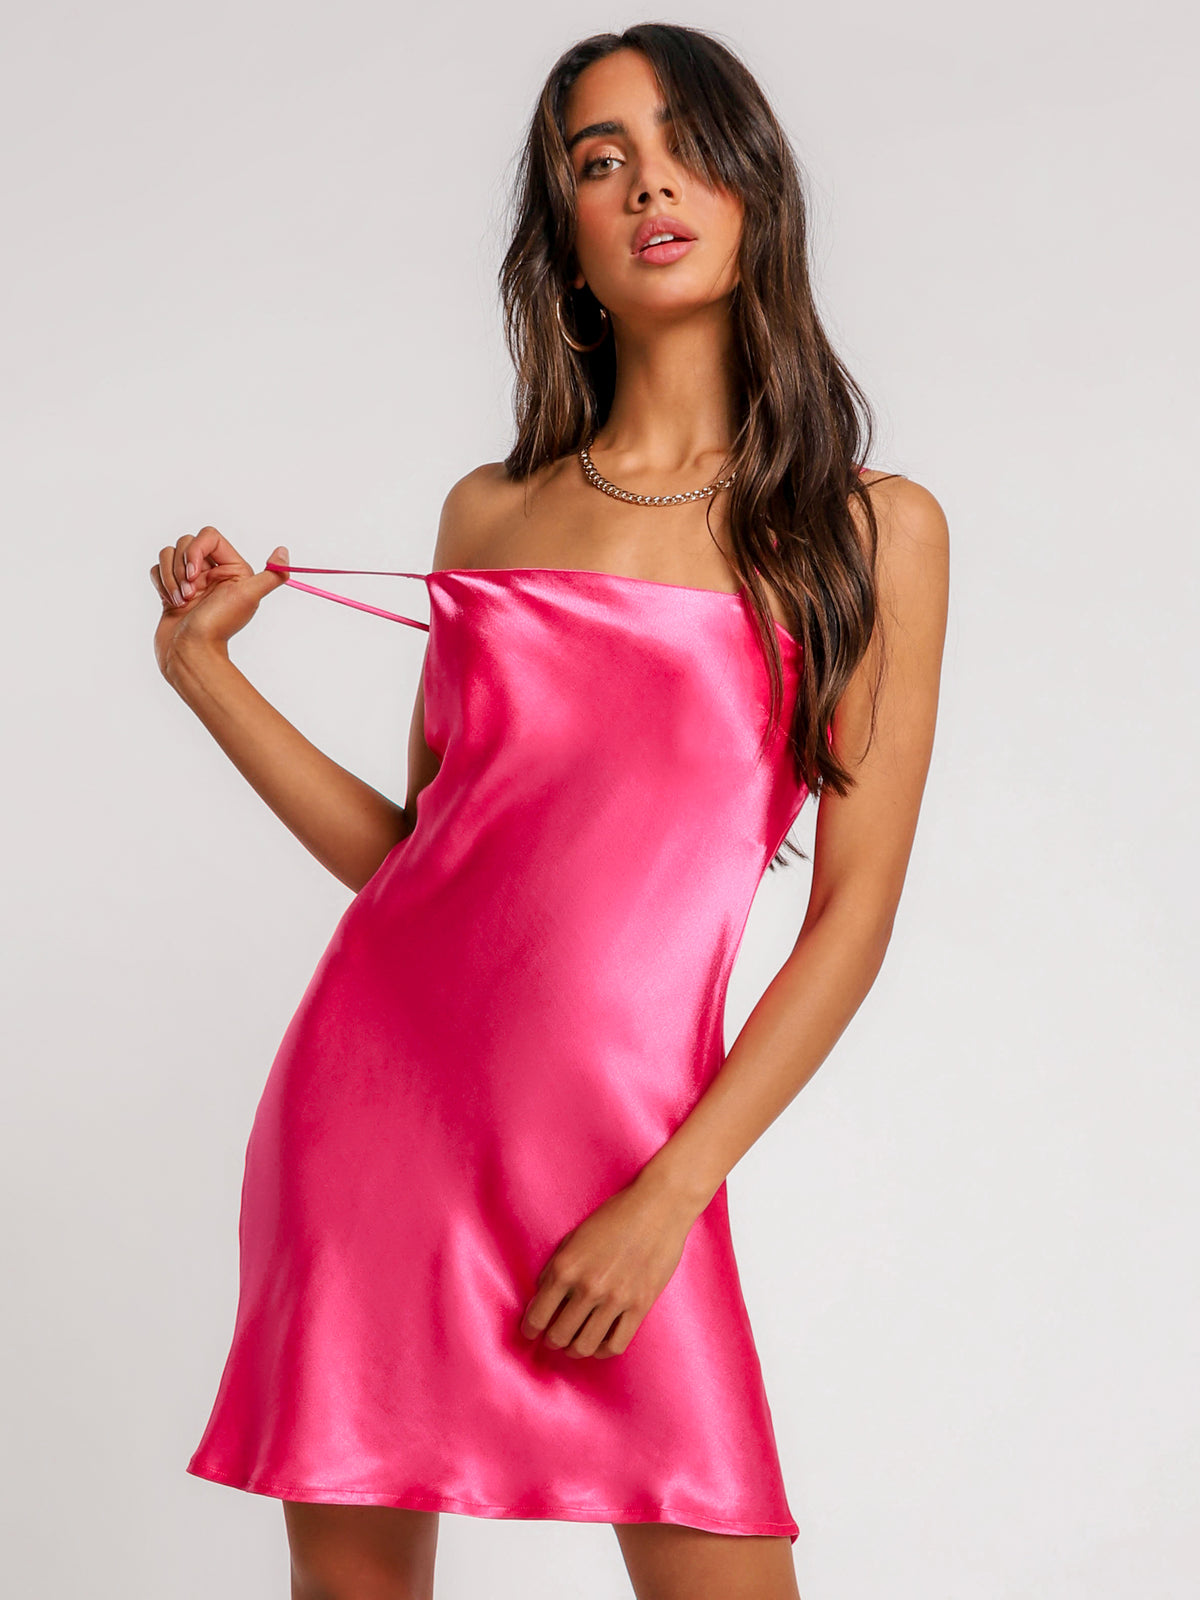 Bias Cut Slip Dress in Pink